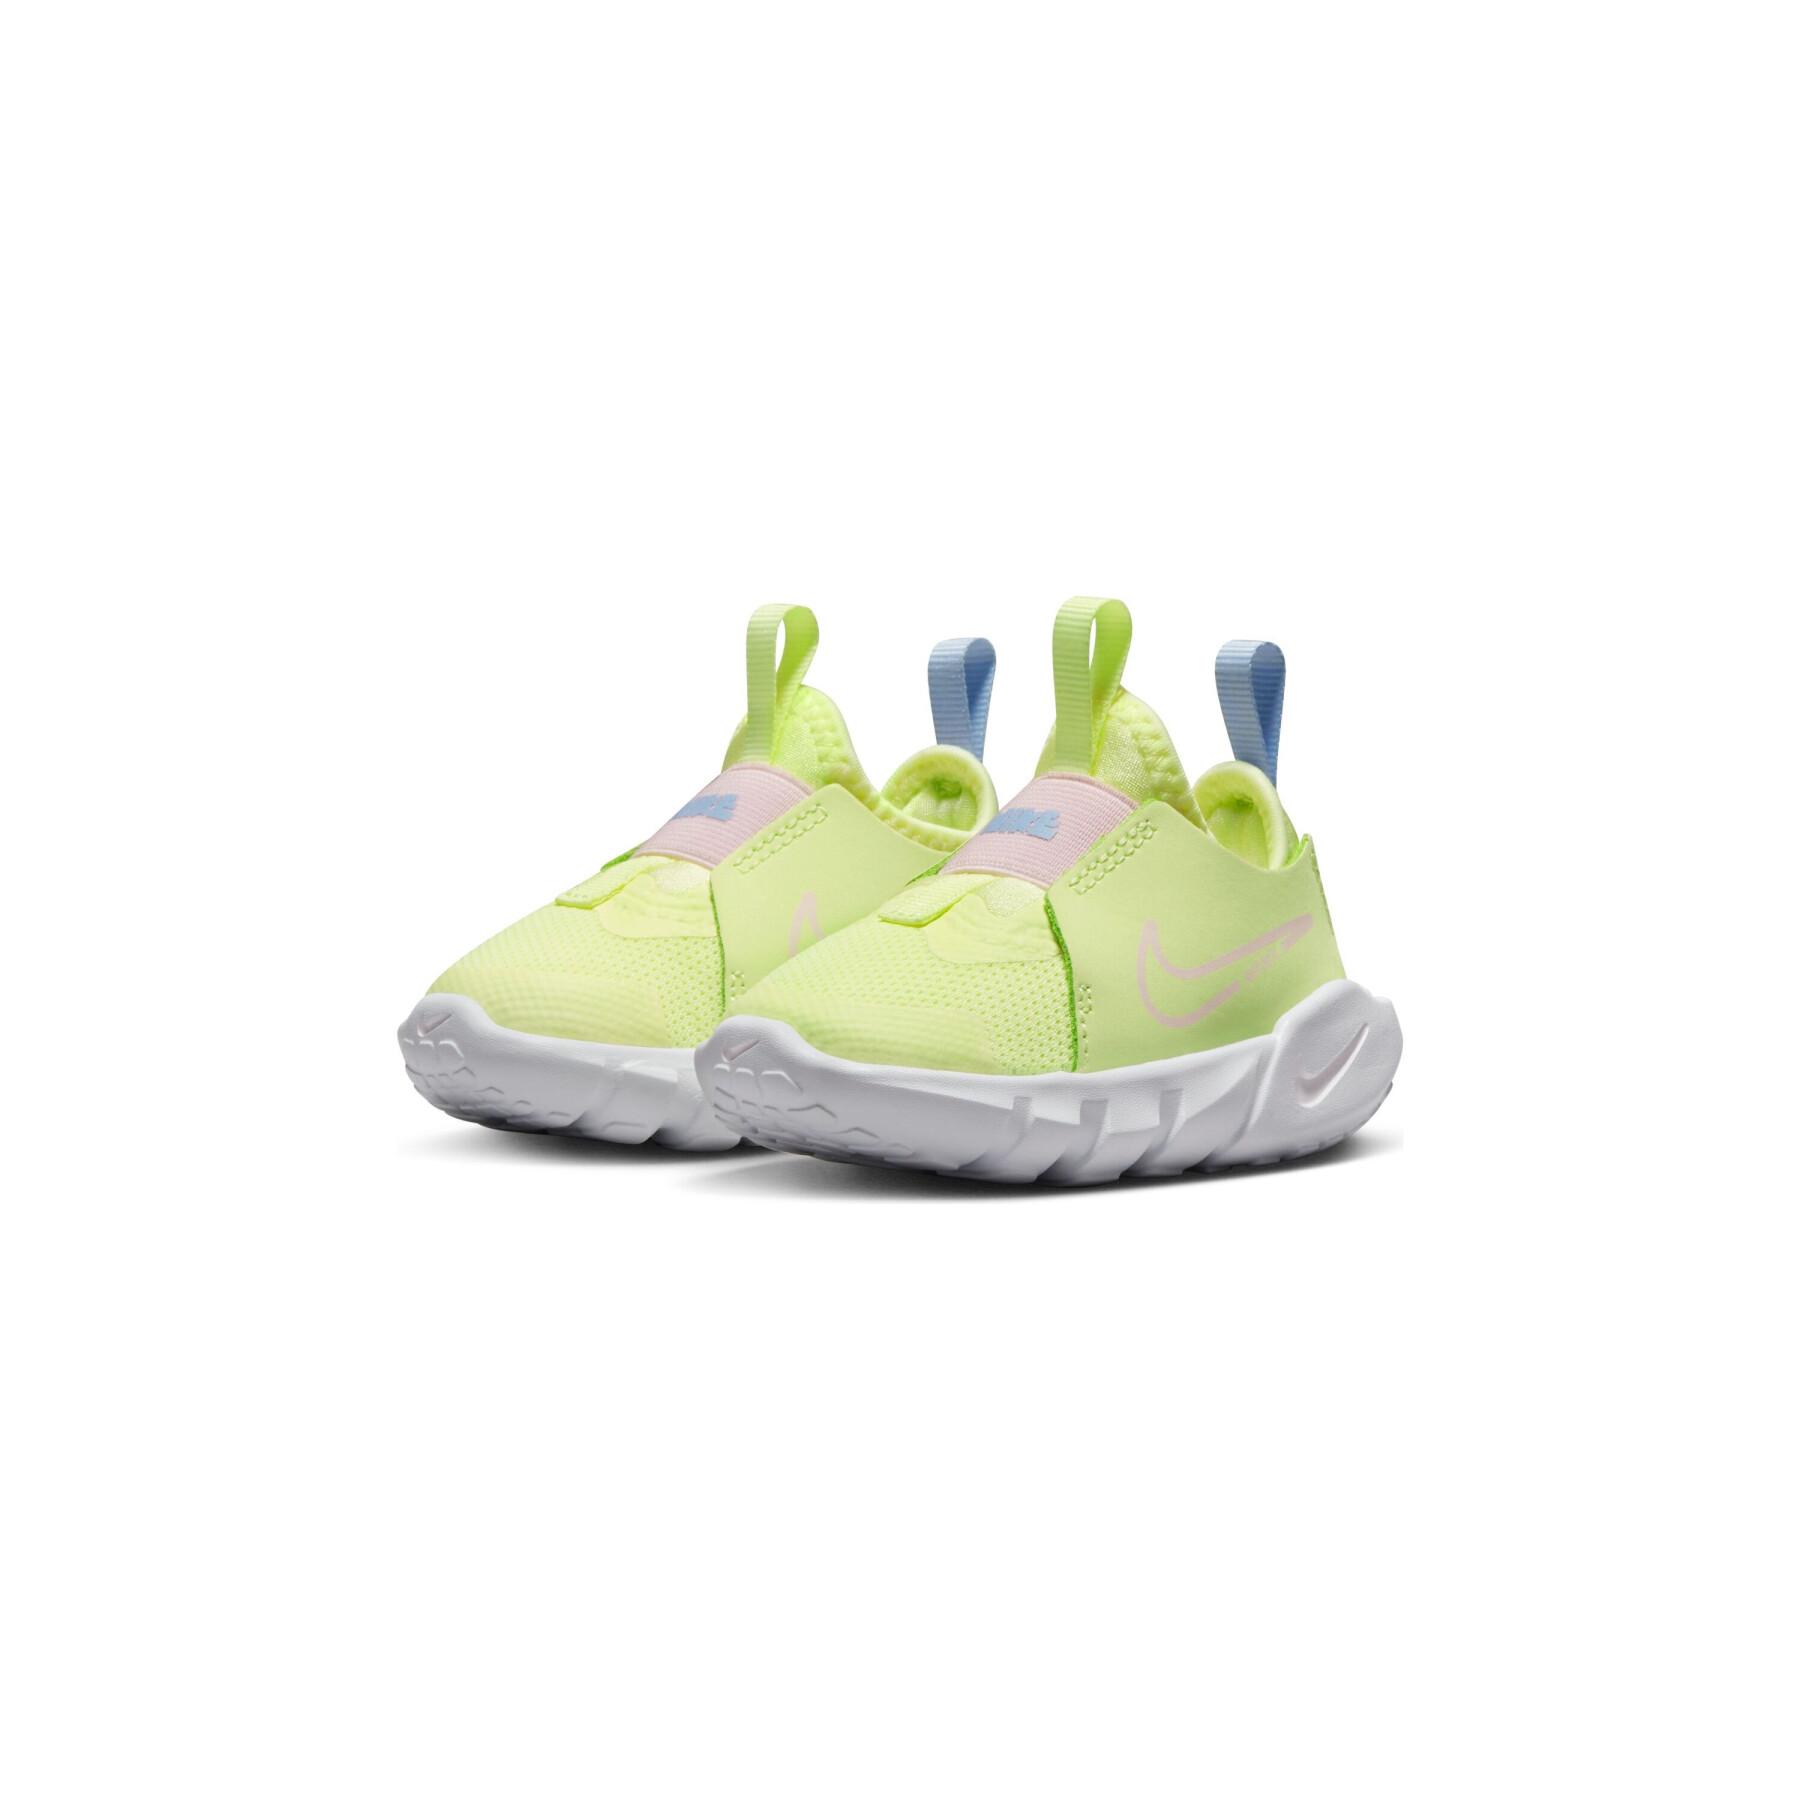 Zapatillas para bebés Nike Flex Runner 2